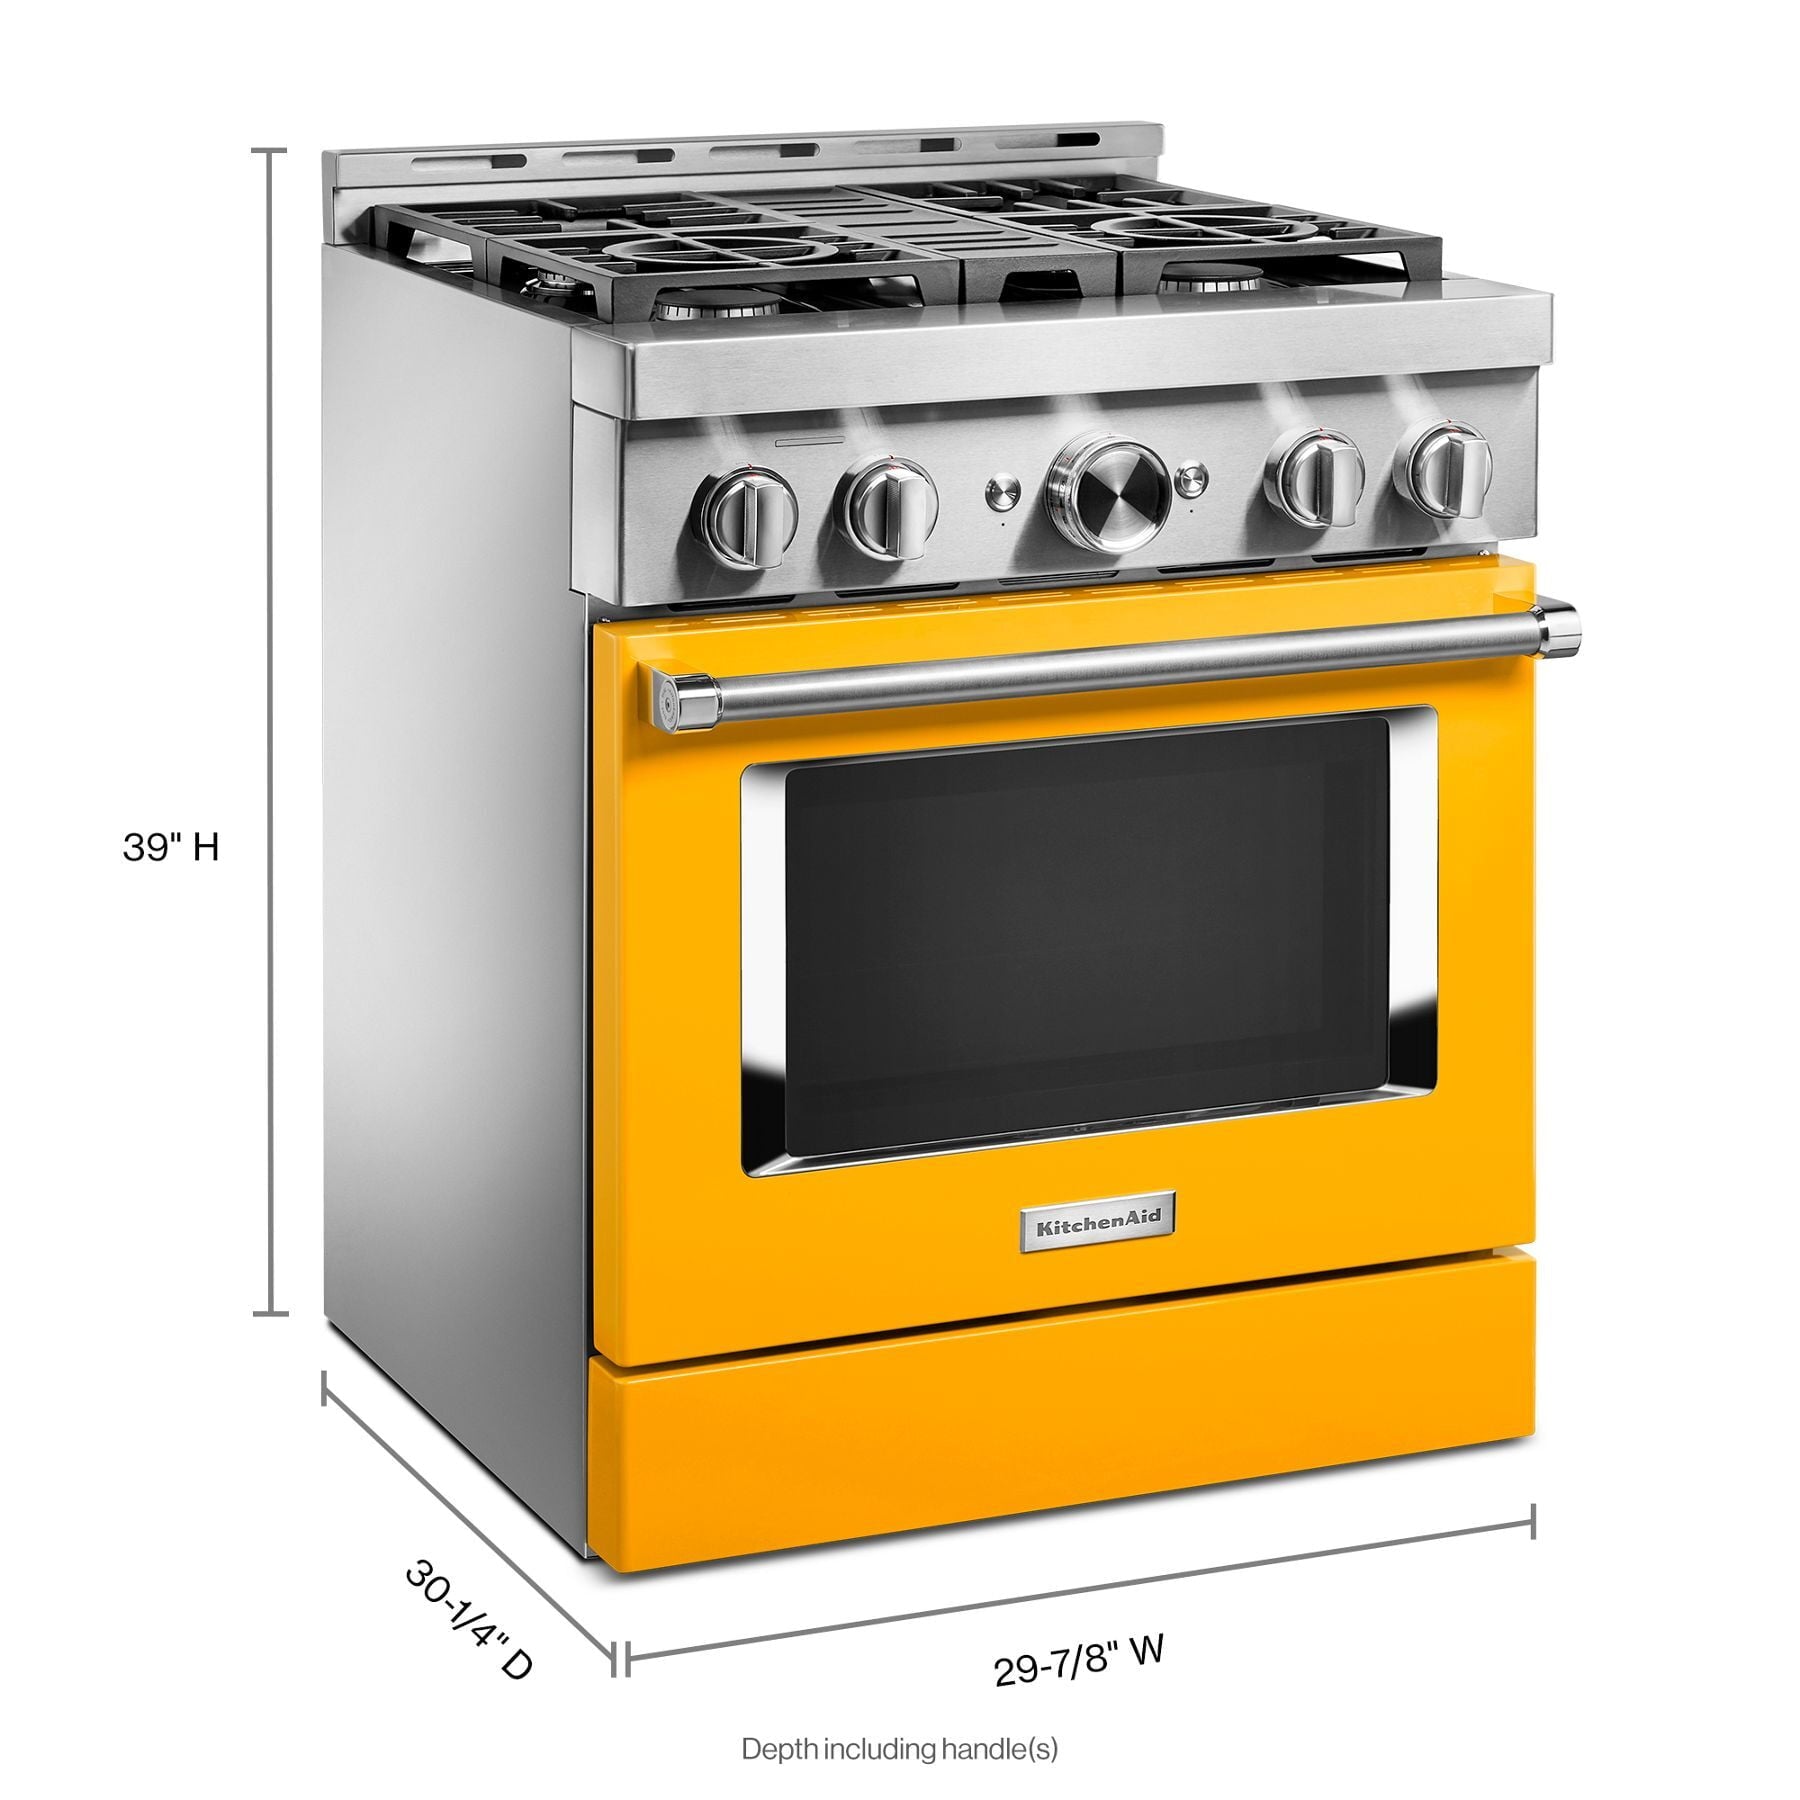 Kitchenaid KFGC500JYP Kitchenaid® 30'' Smart Commercial-Style Gas Range With 4 Burners - Yellow Pepper